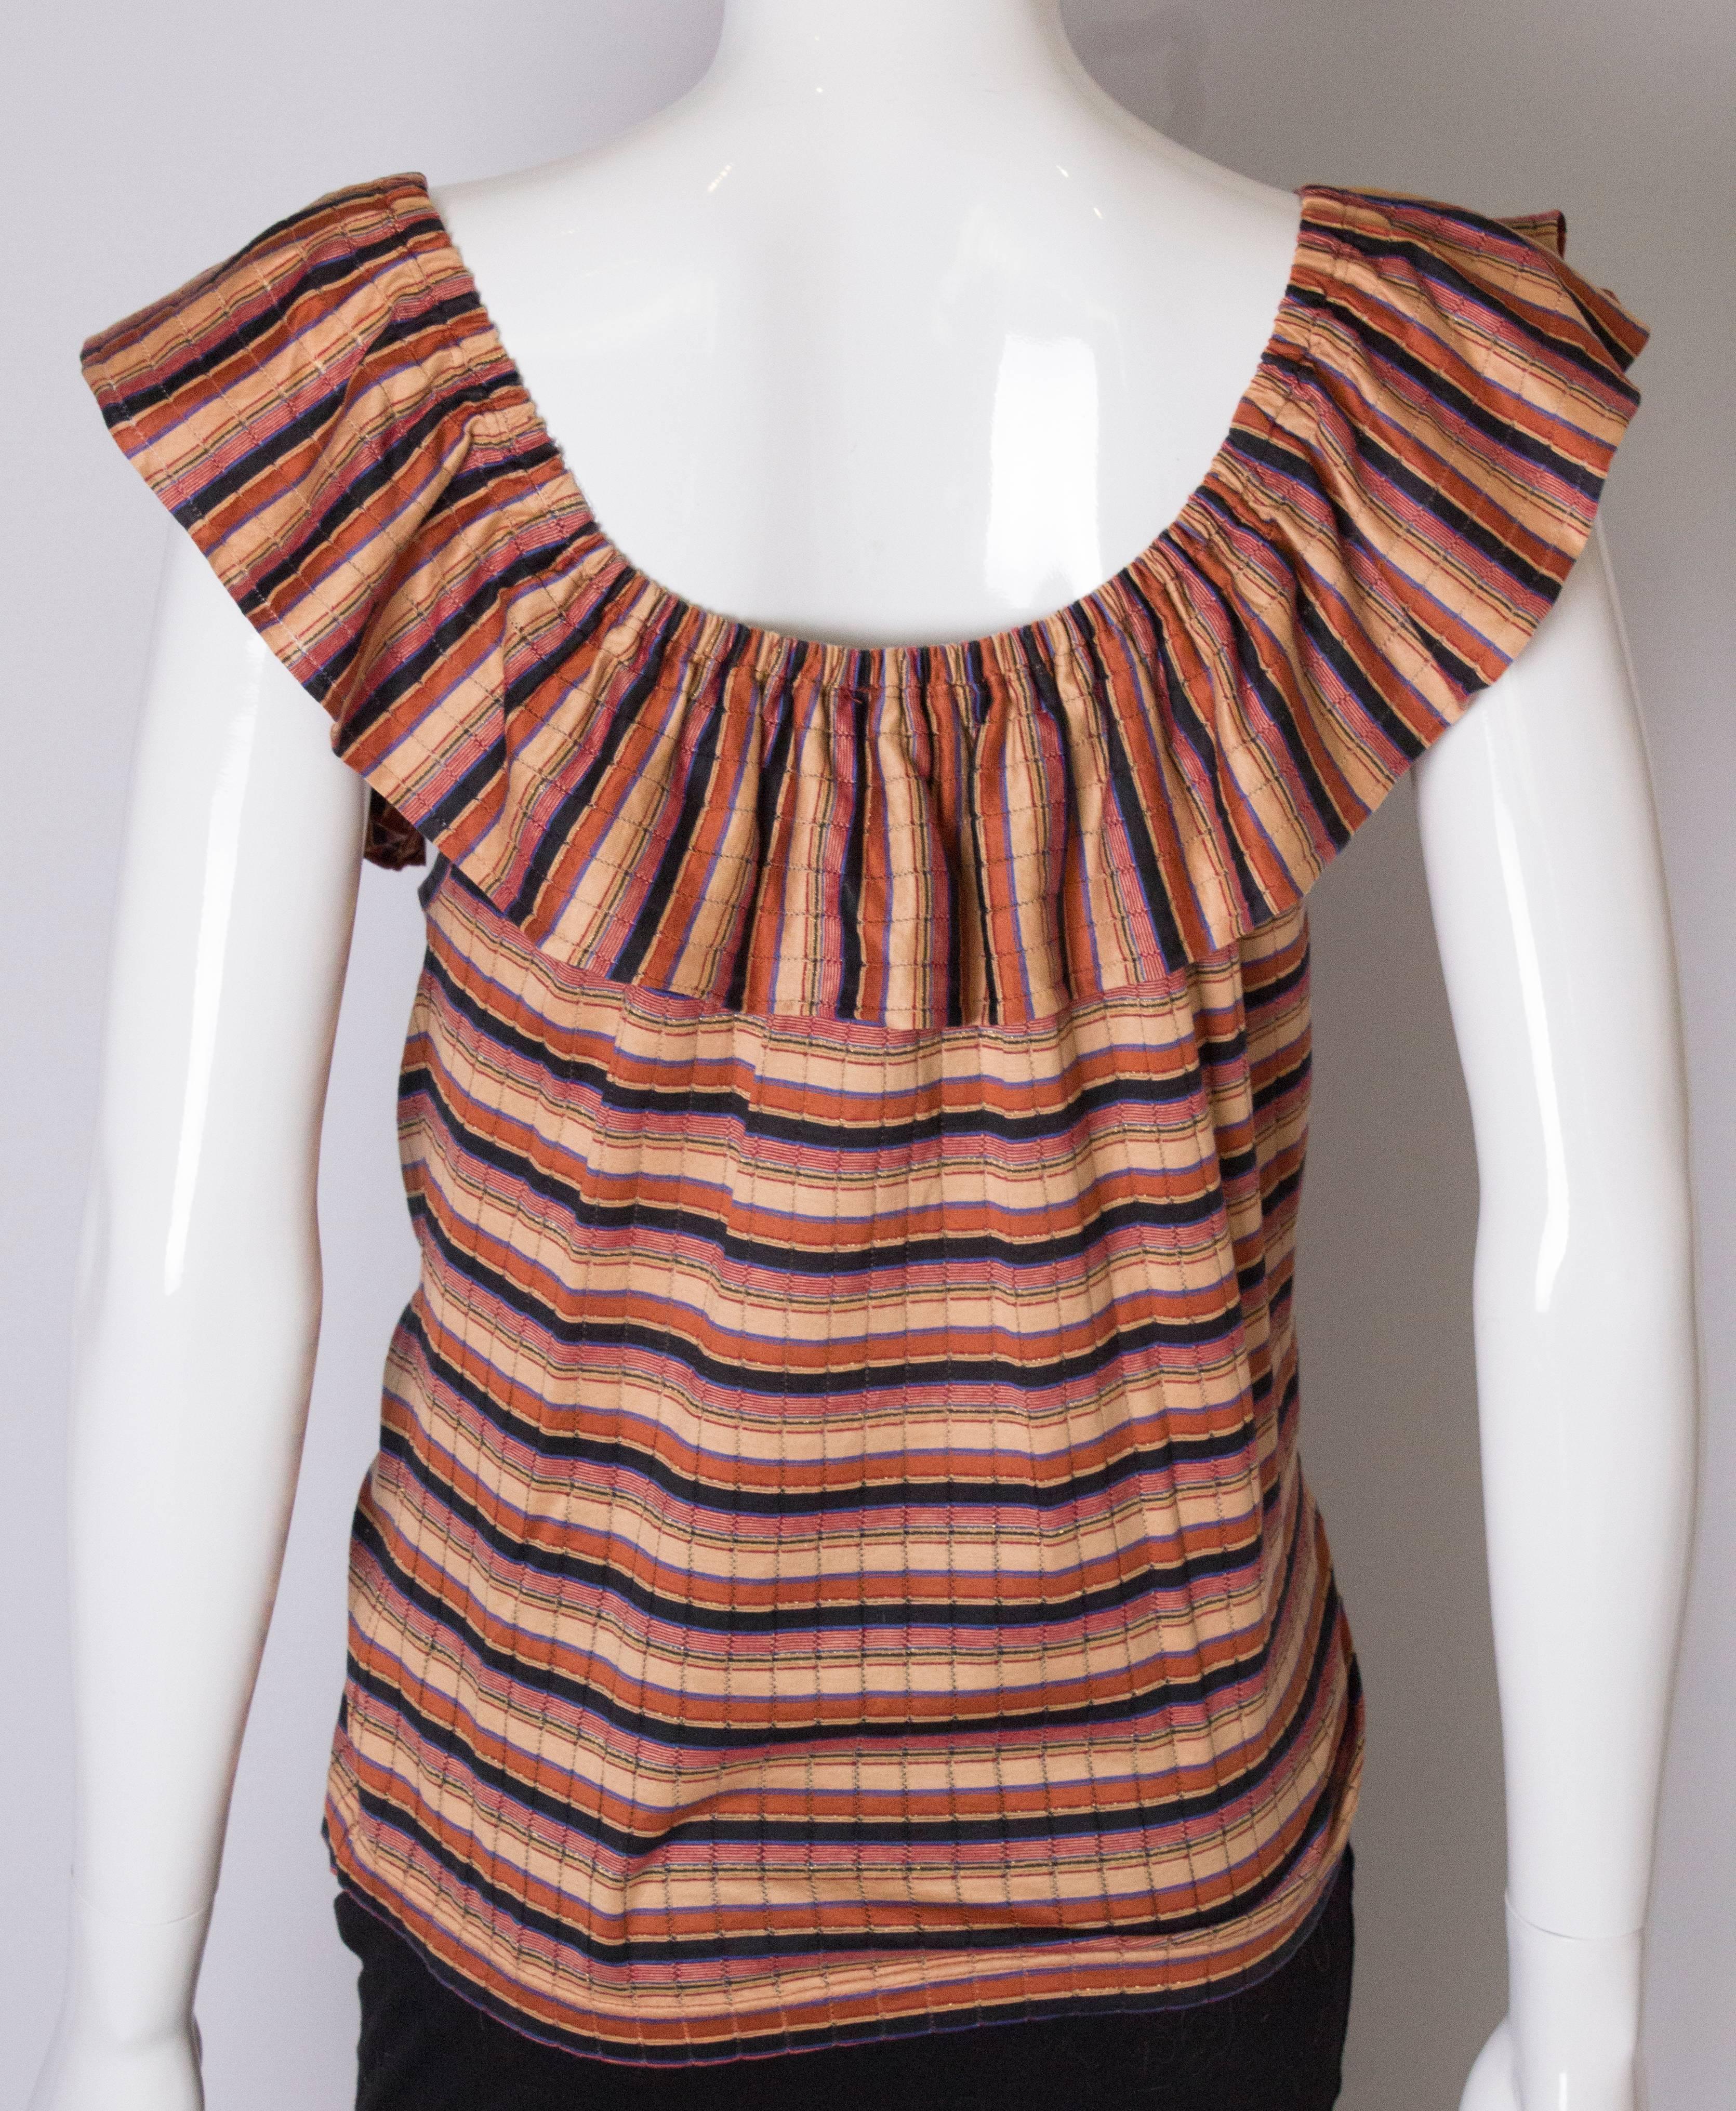  A Vintage 1970s striped off shoulder summer top by Yves Saint Laurent  3